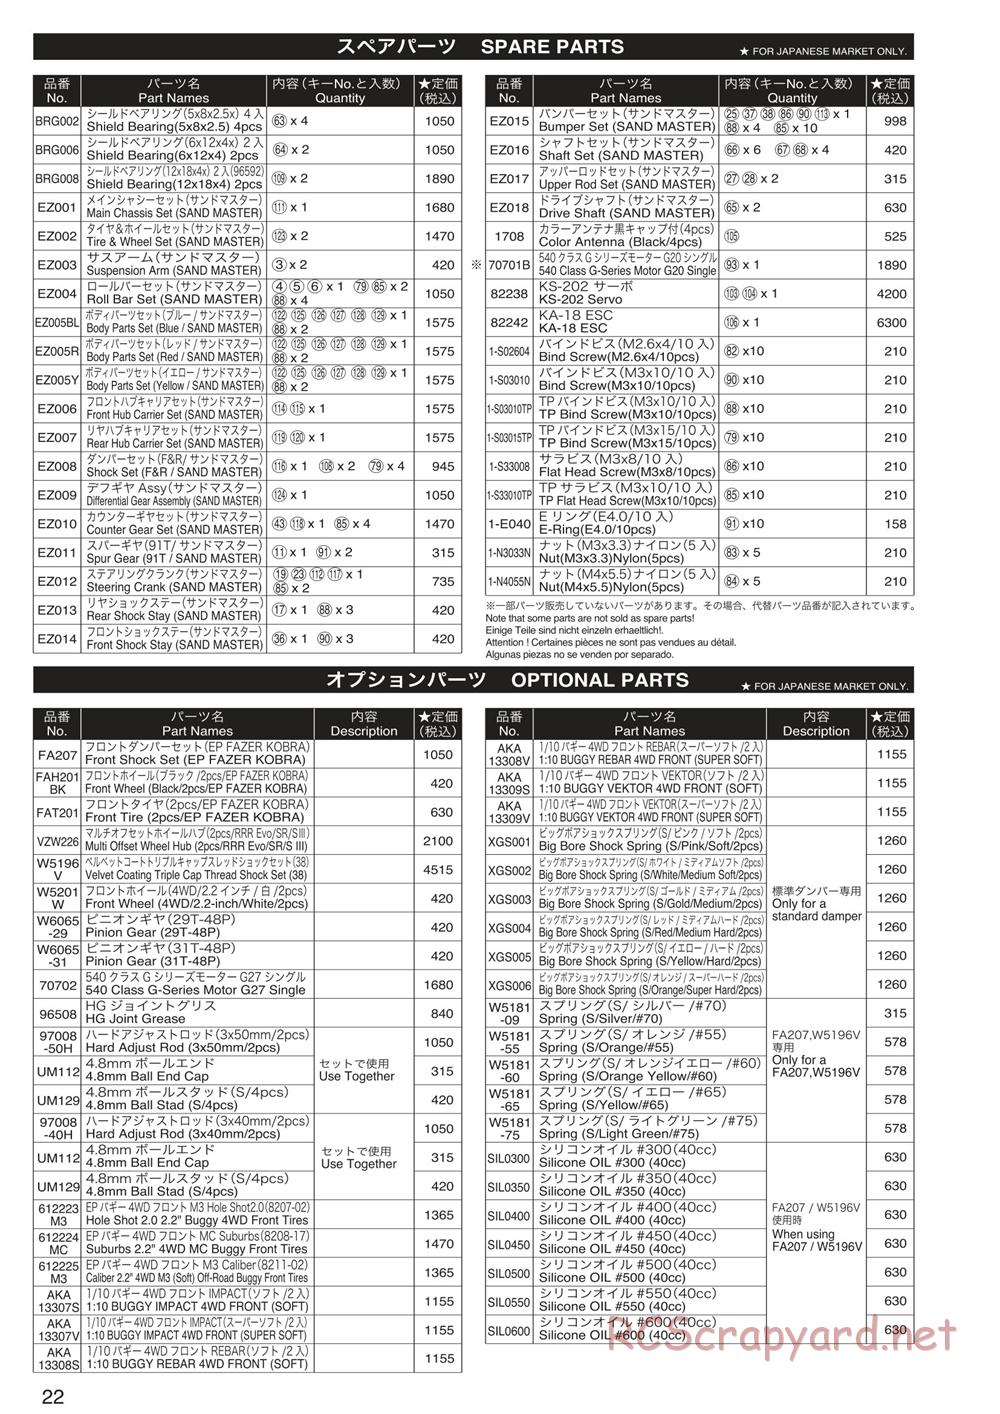 Kyosho - Sandmaster - Parts List - Page 1